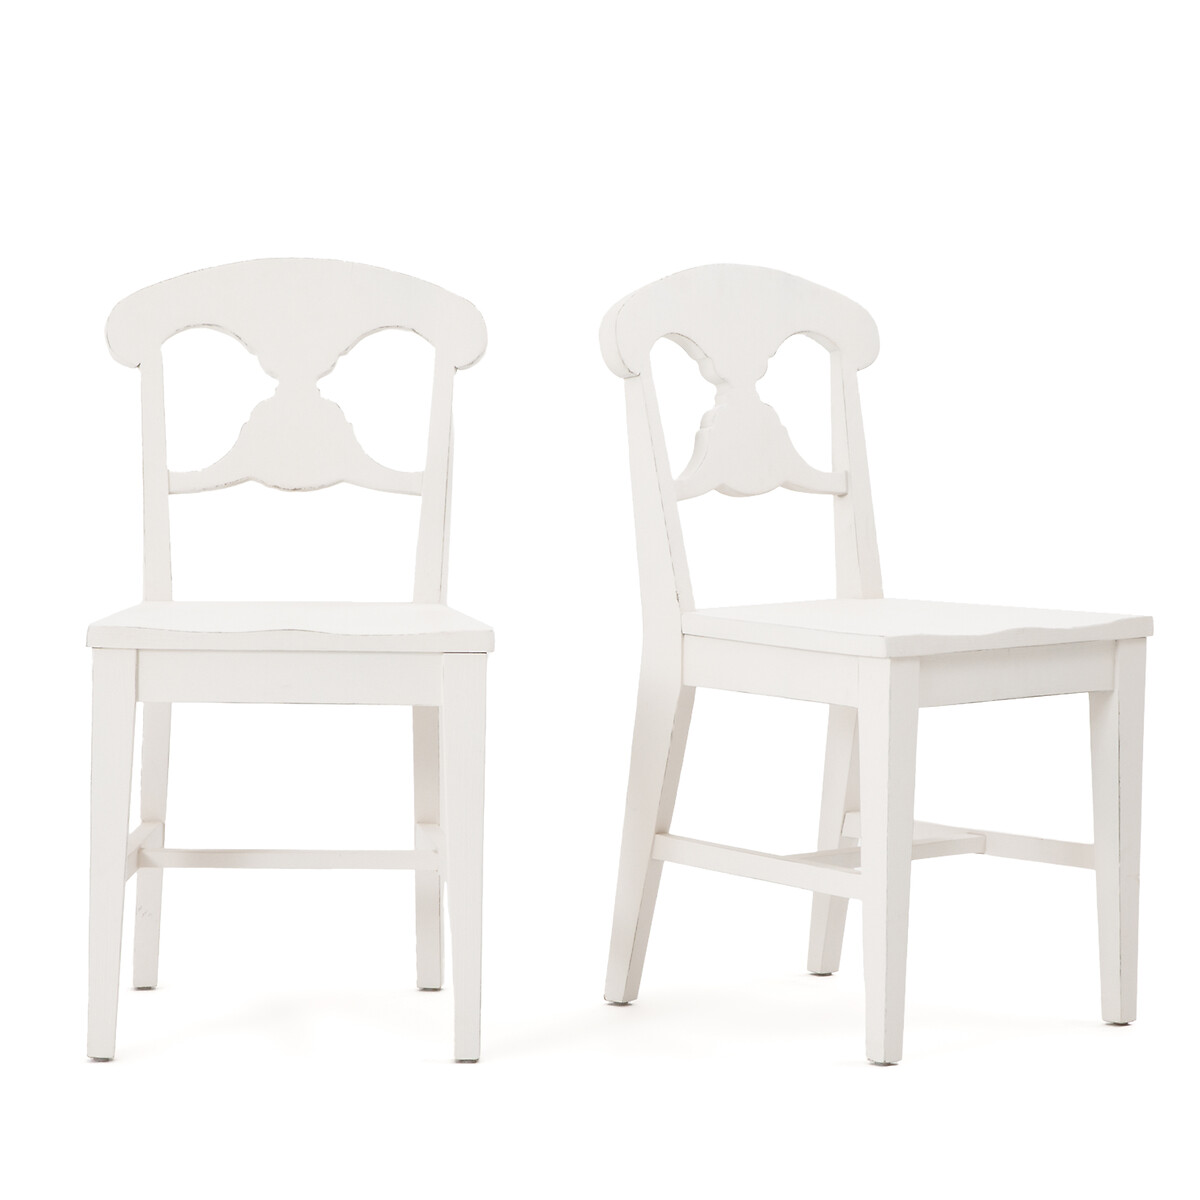 Set of 2 Swedish Pine Aged Effect Chairs